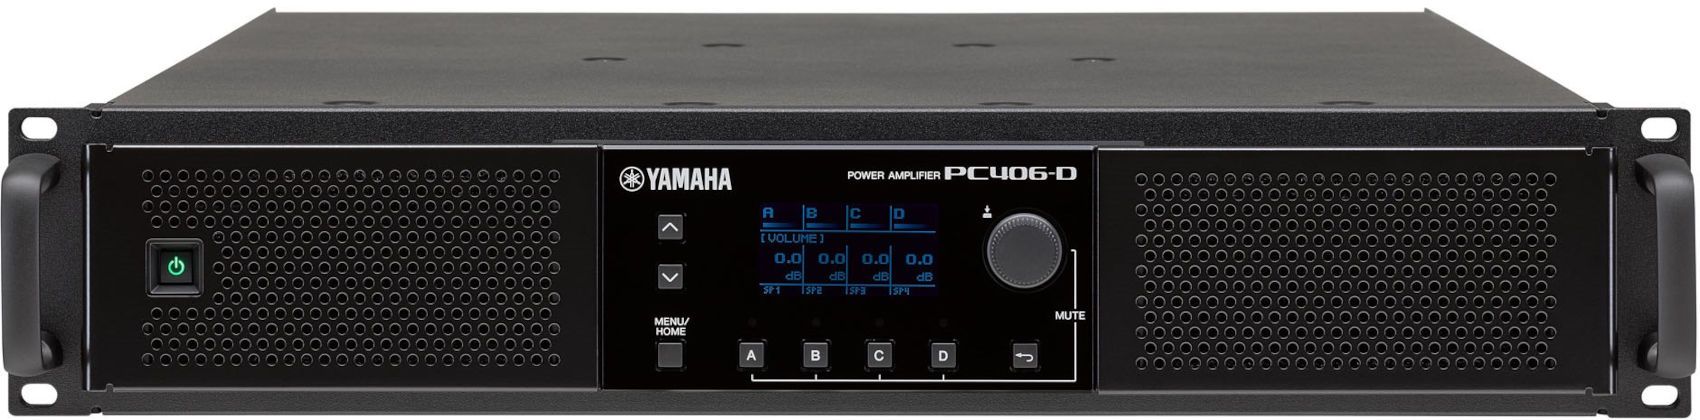 Yamaha PC406-D - фото 2